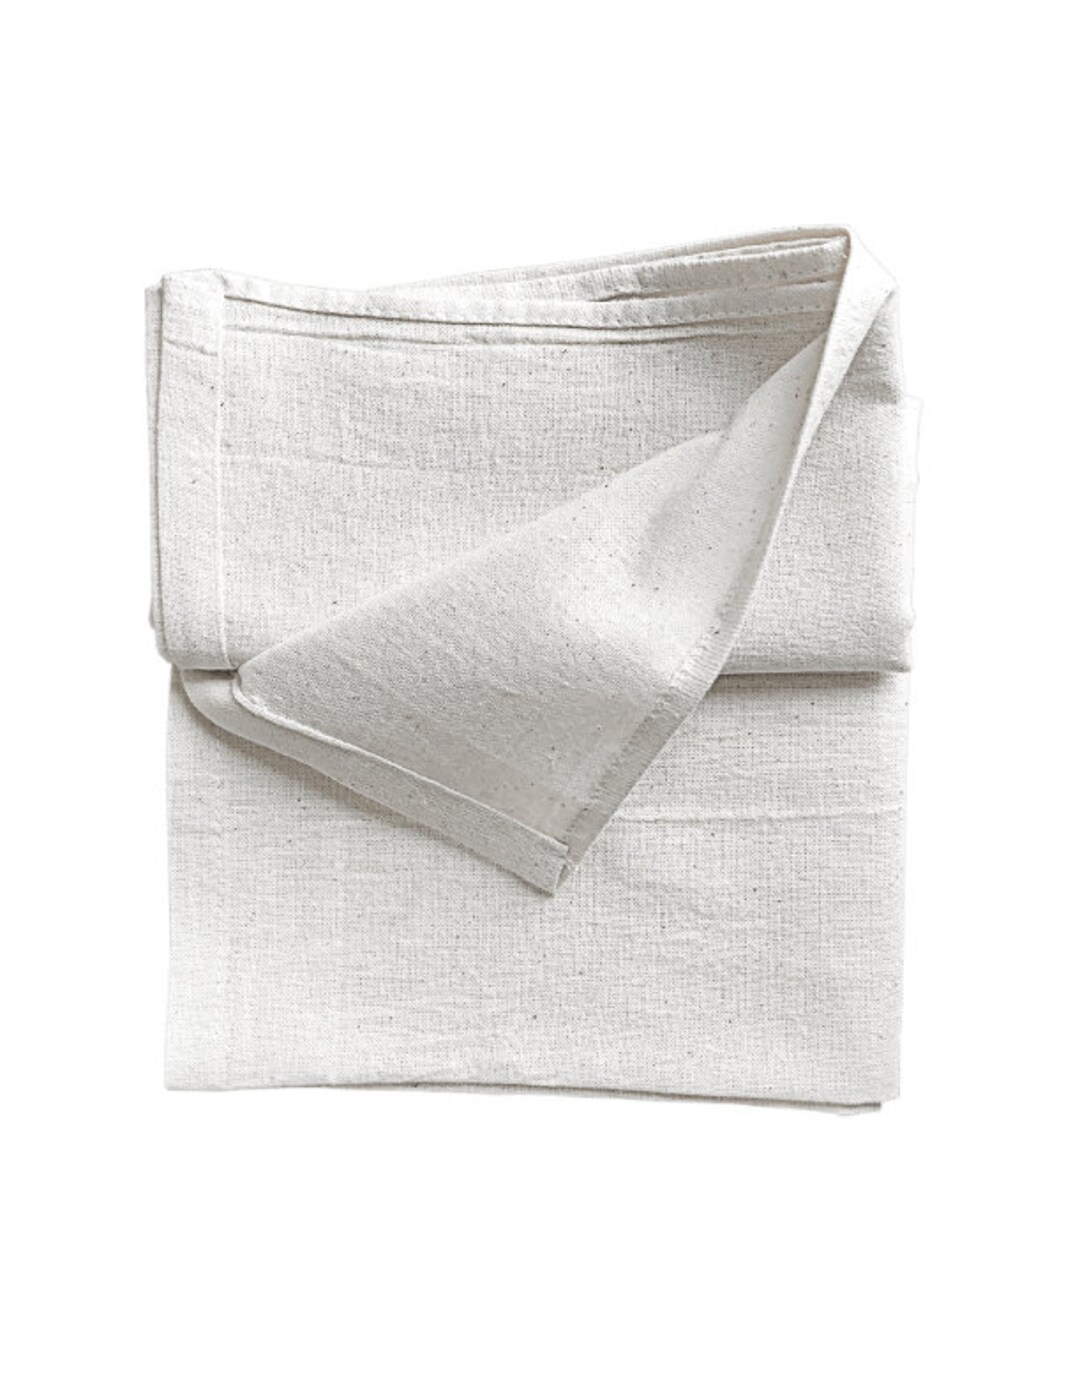 Old Fashion 100% Cotton Dishcloths - Set of 4 - 12 x 12 (Natural